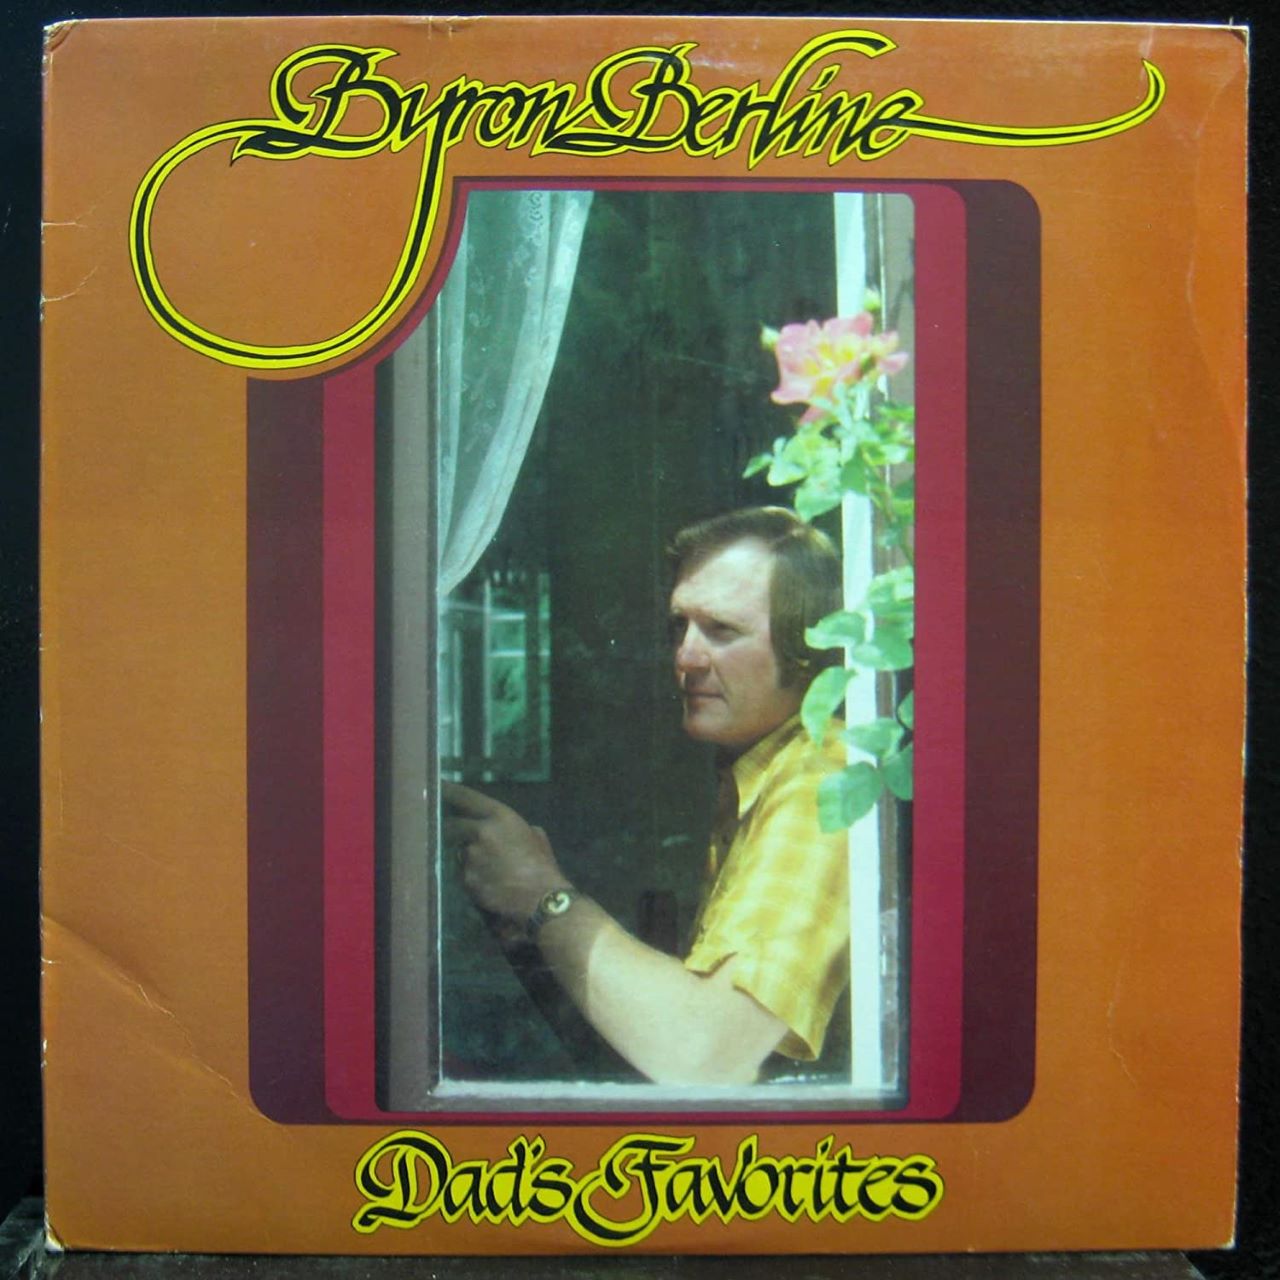 Byron Berline - Dad's Favorites cover album